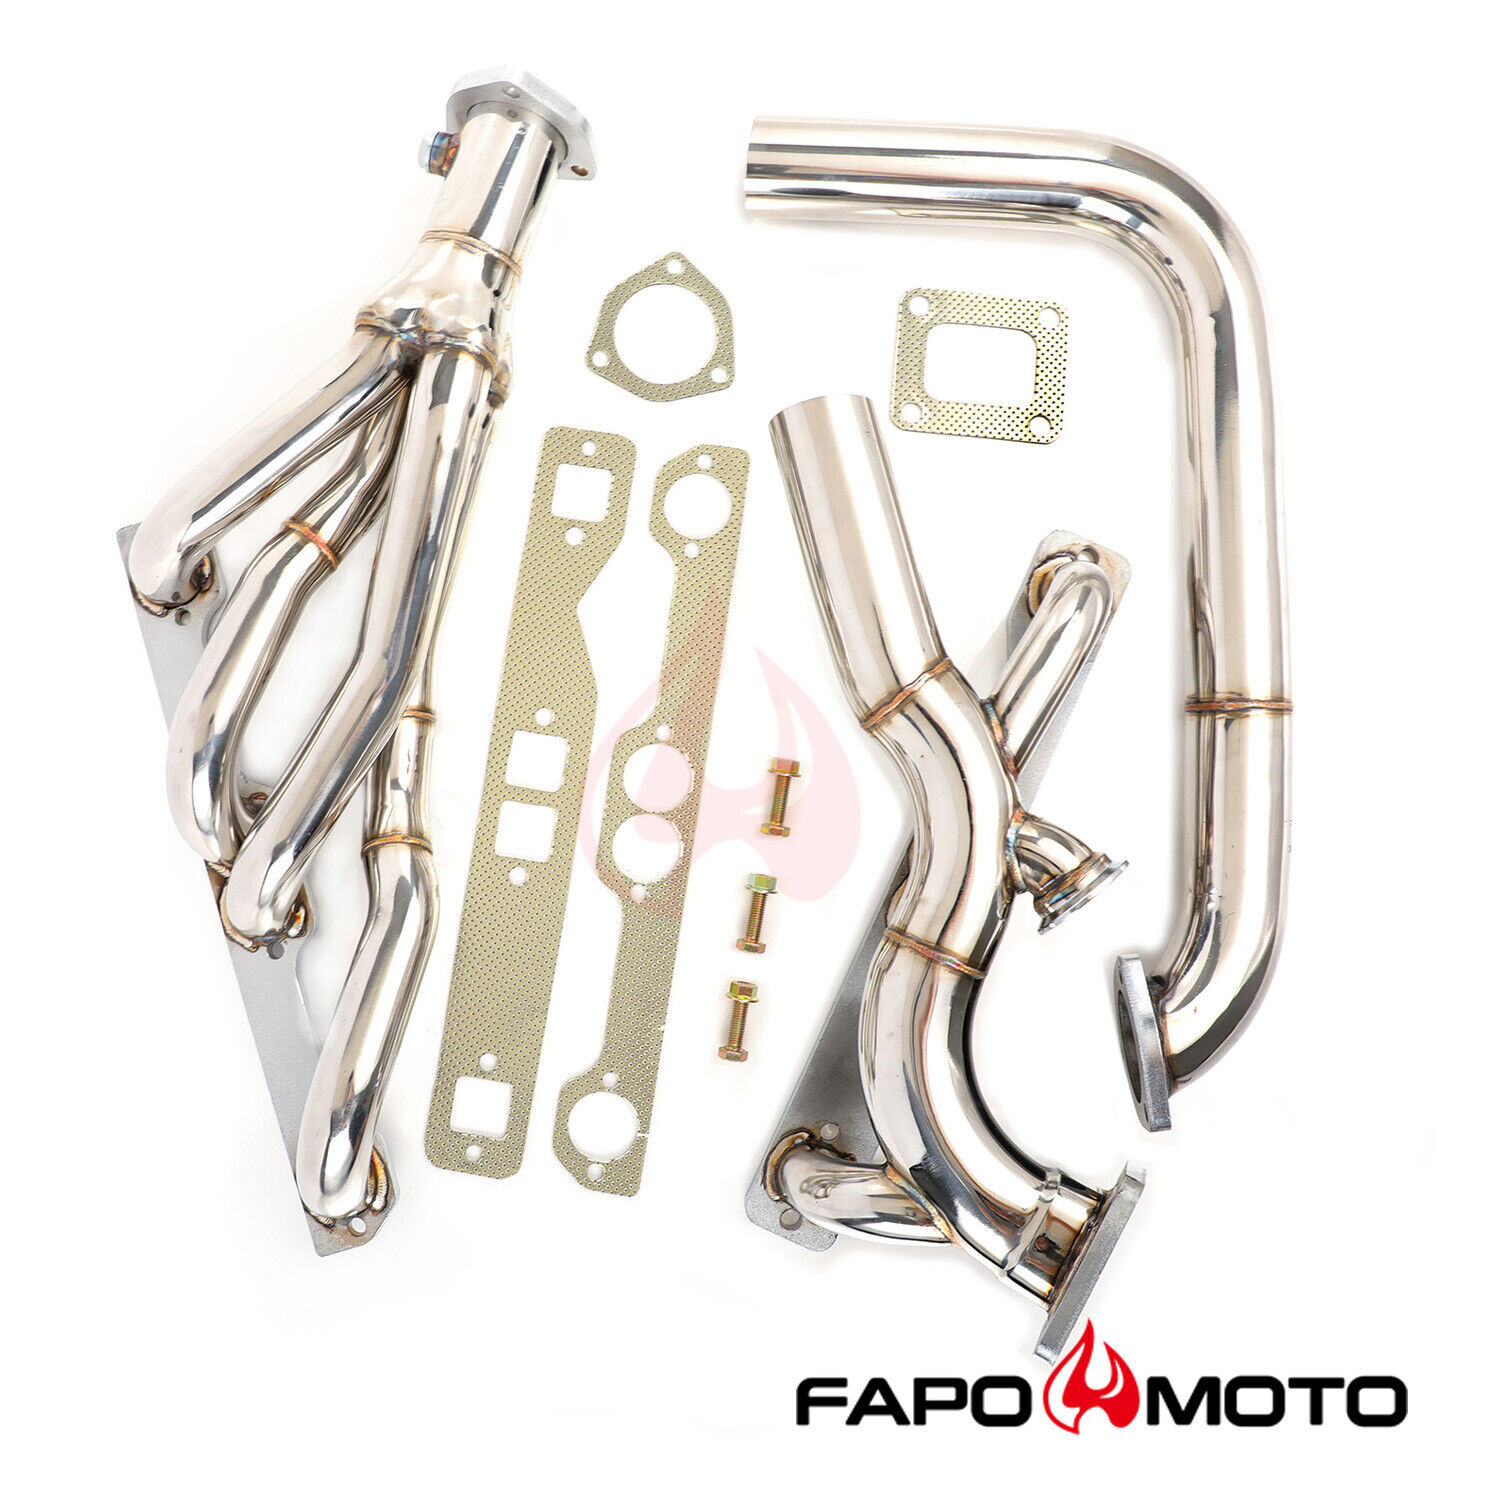 FAPO Turbo Headers for GMC Chevy 88-98 C/K 1500 C/K 2500 305 350 Small Block V8